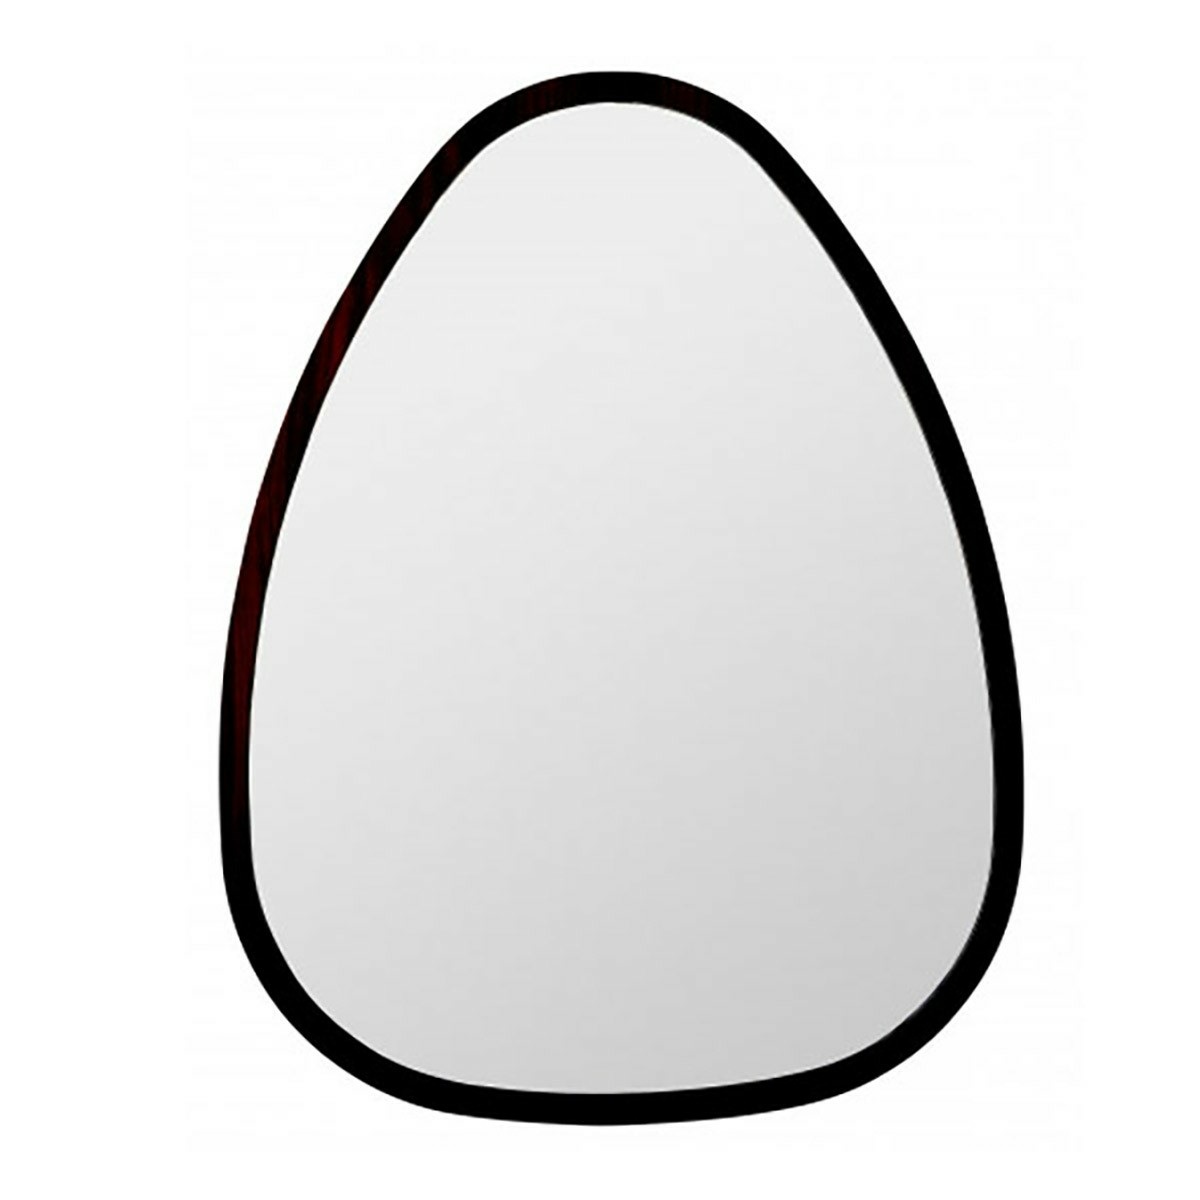 Mirror Ovo, Walnut - H75 cm - Walnut oiled   - image 18